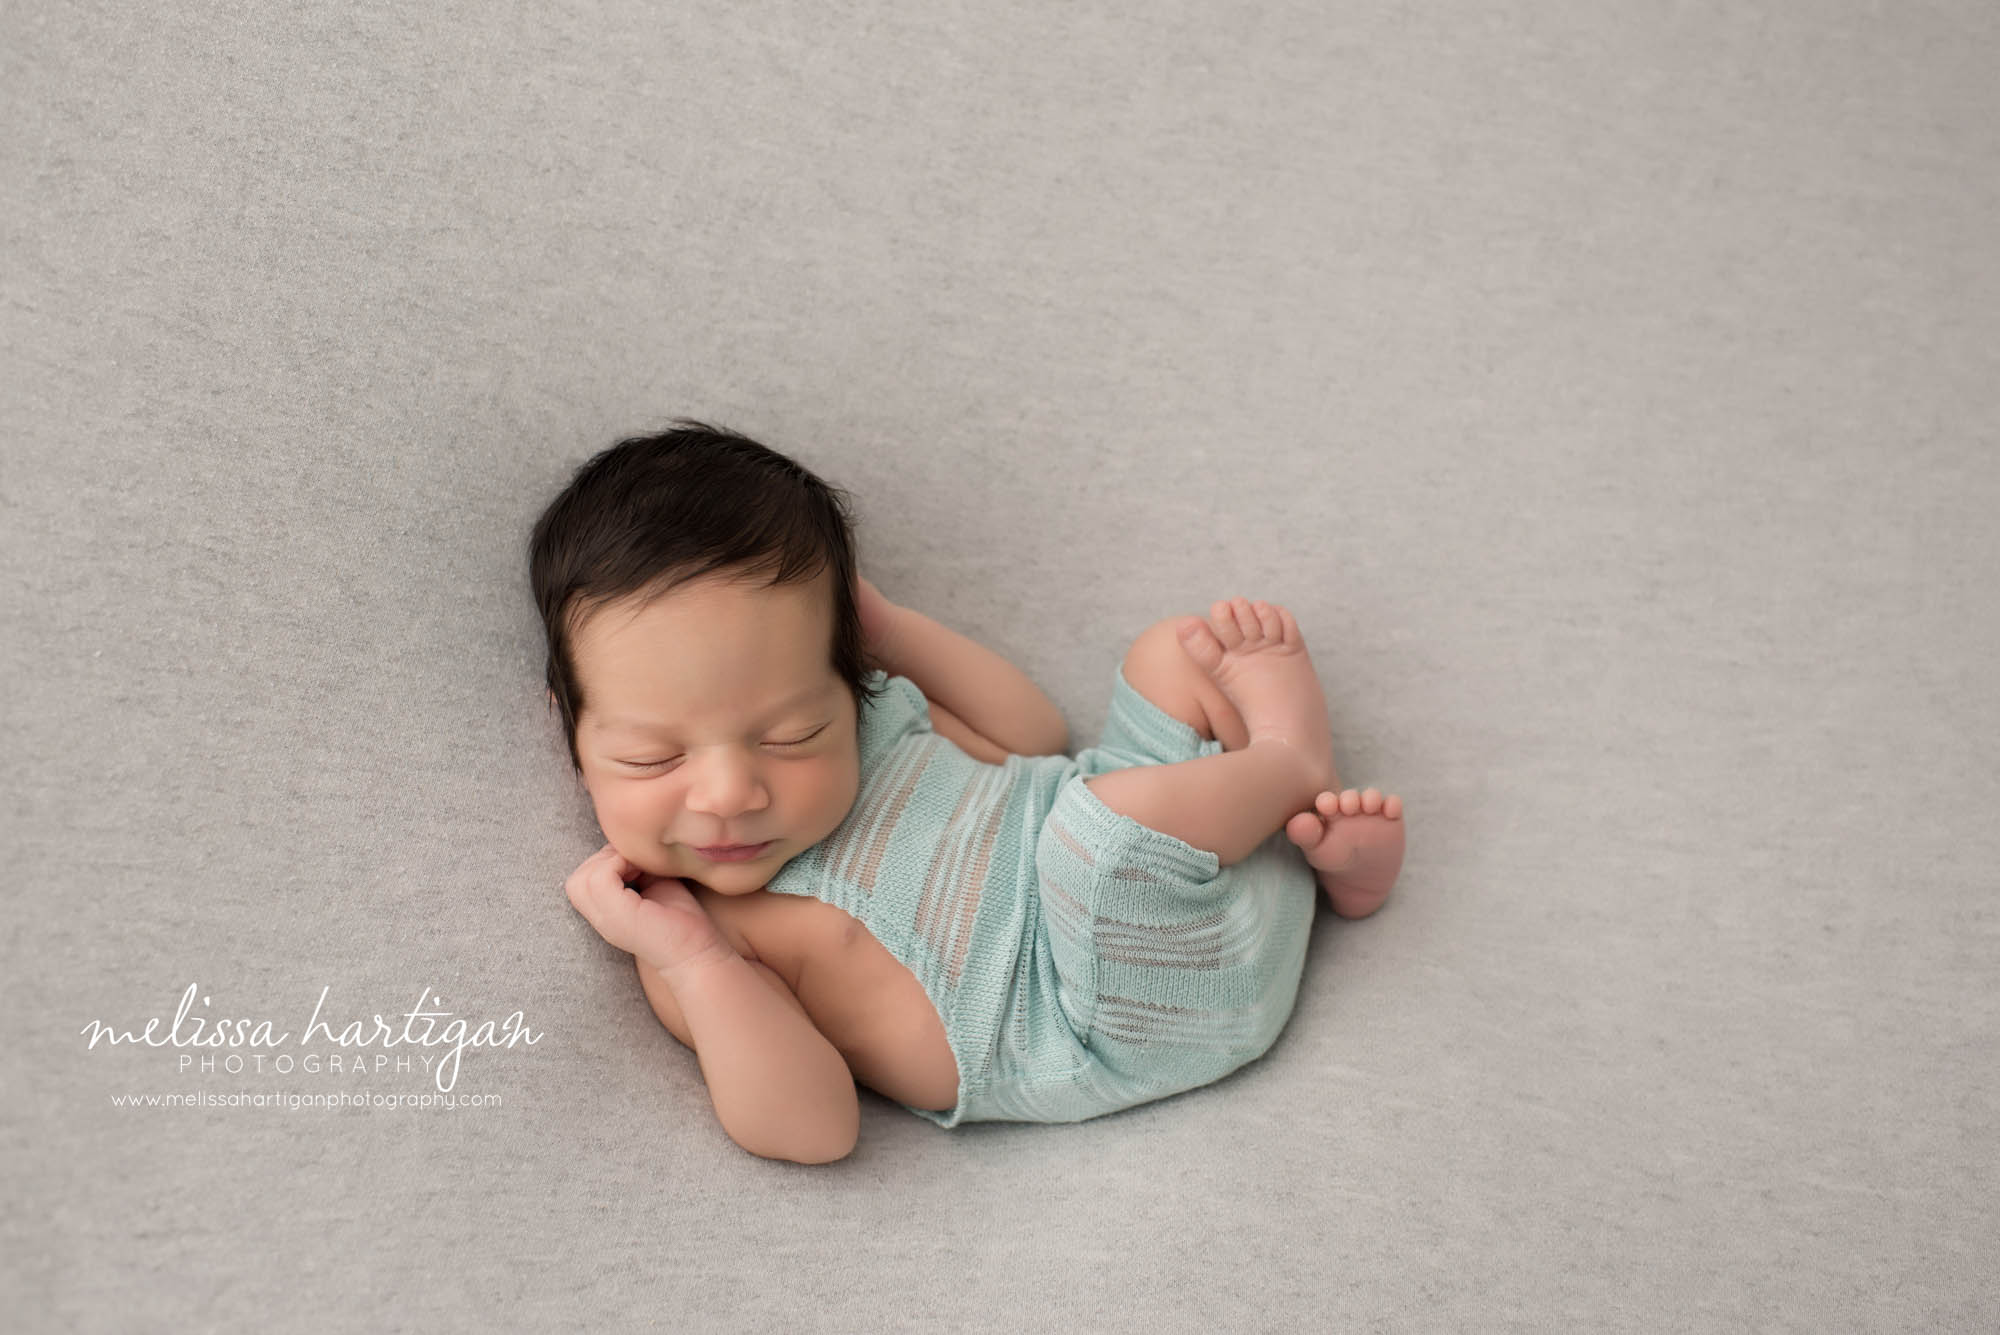 Melissa Hartigan Photography CT Newborn Photographer East Hartford baby boy sleeping smiling wearing light blue knit overalls